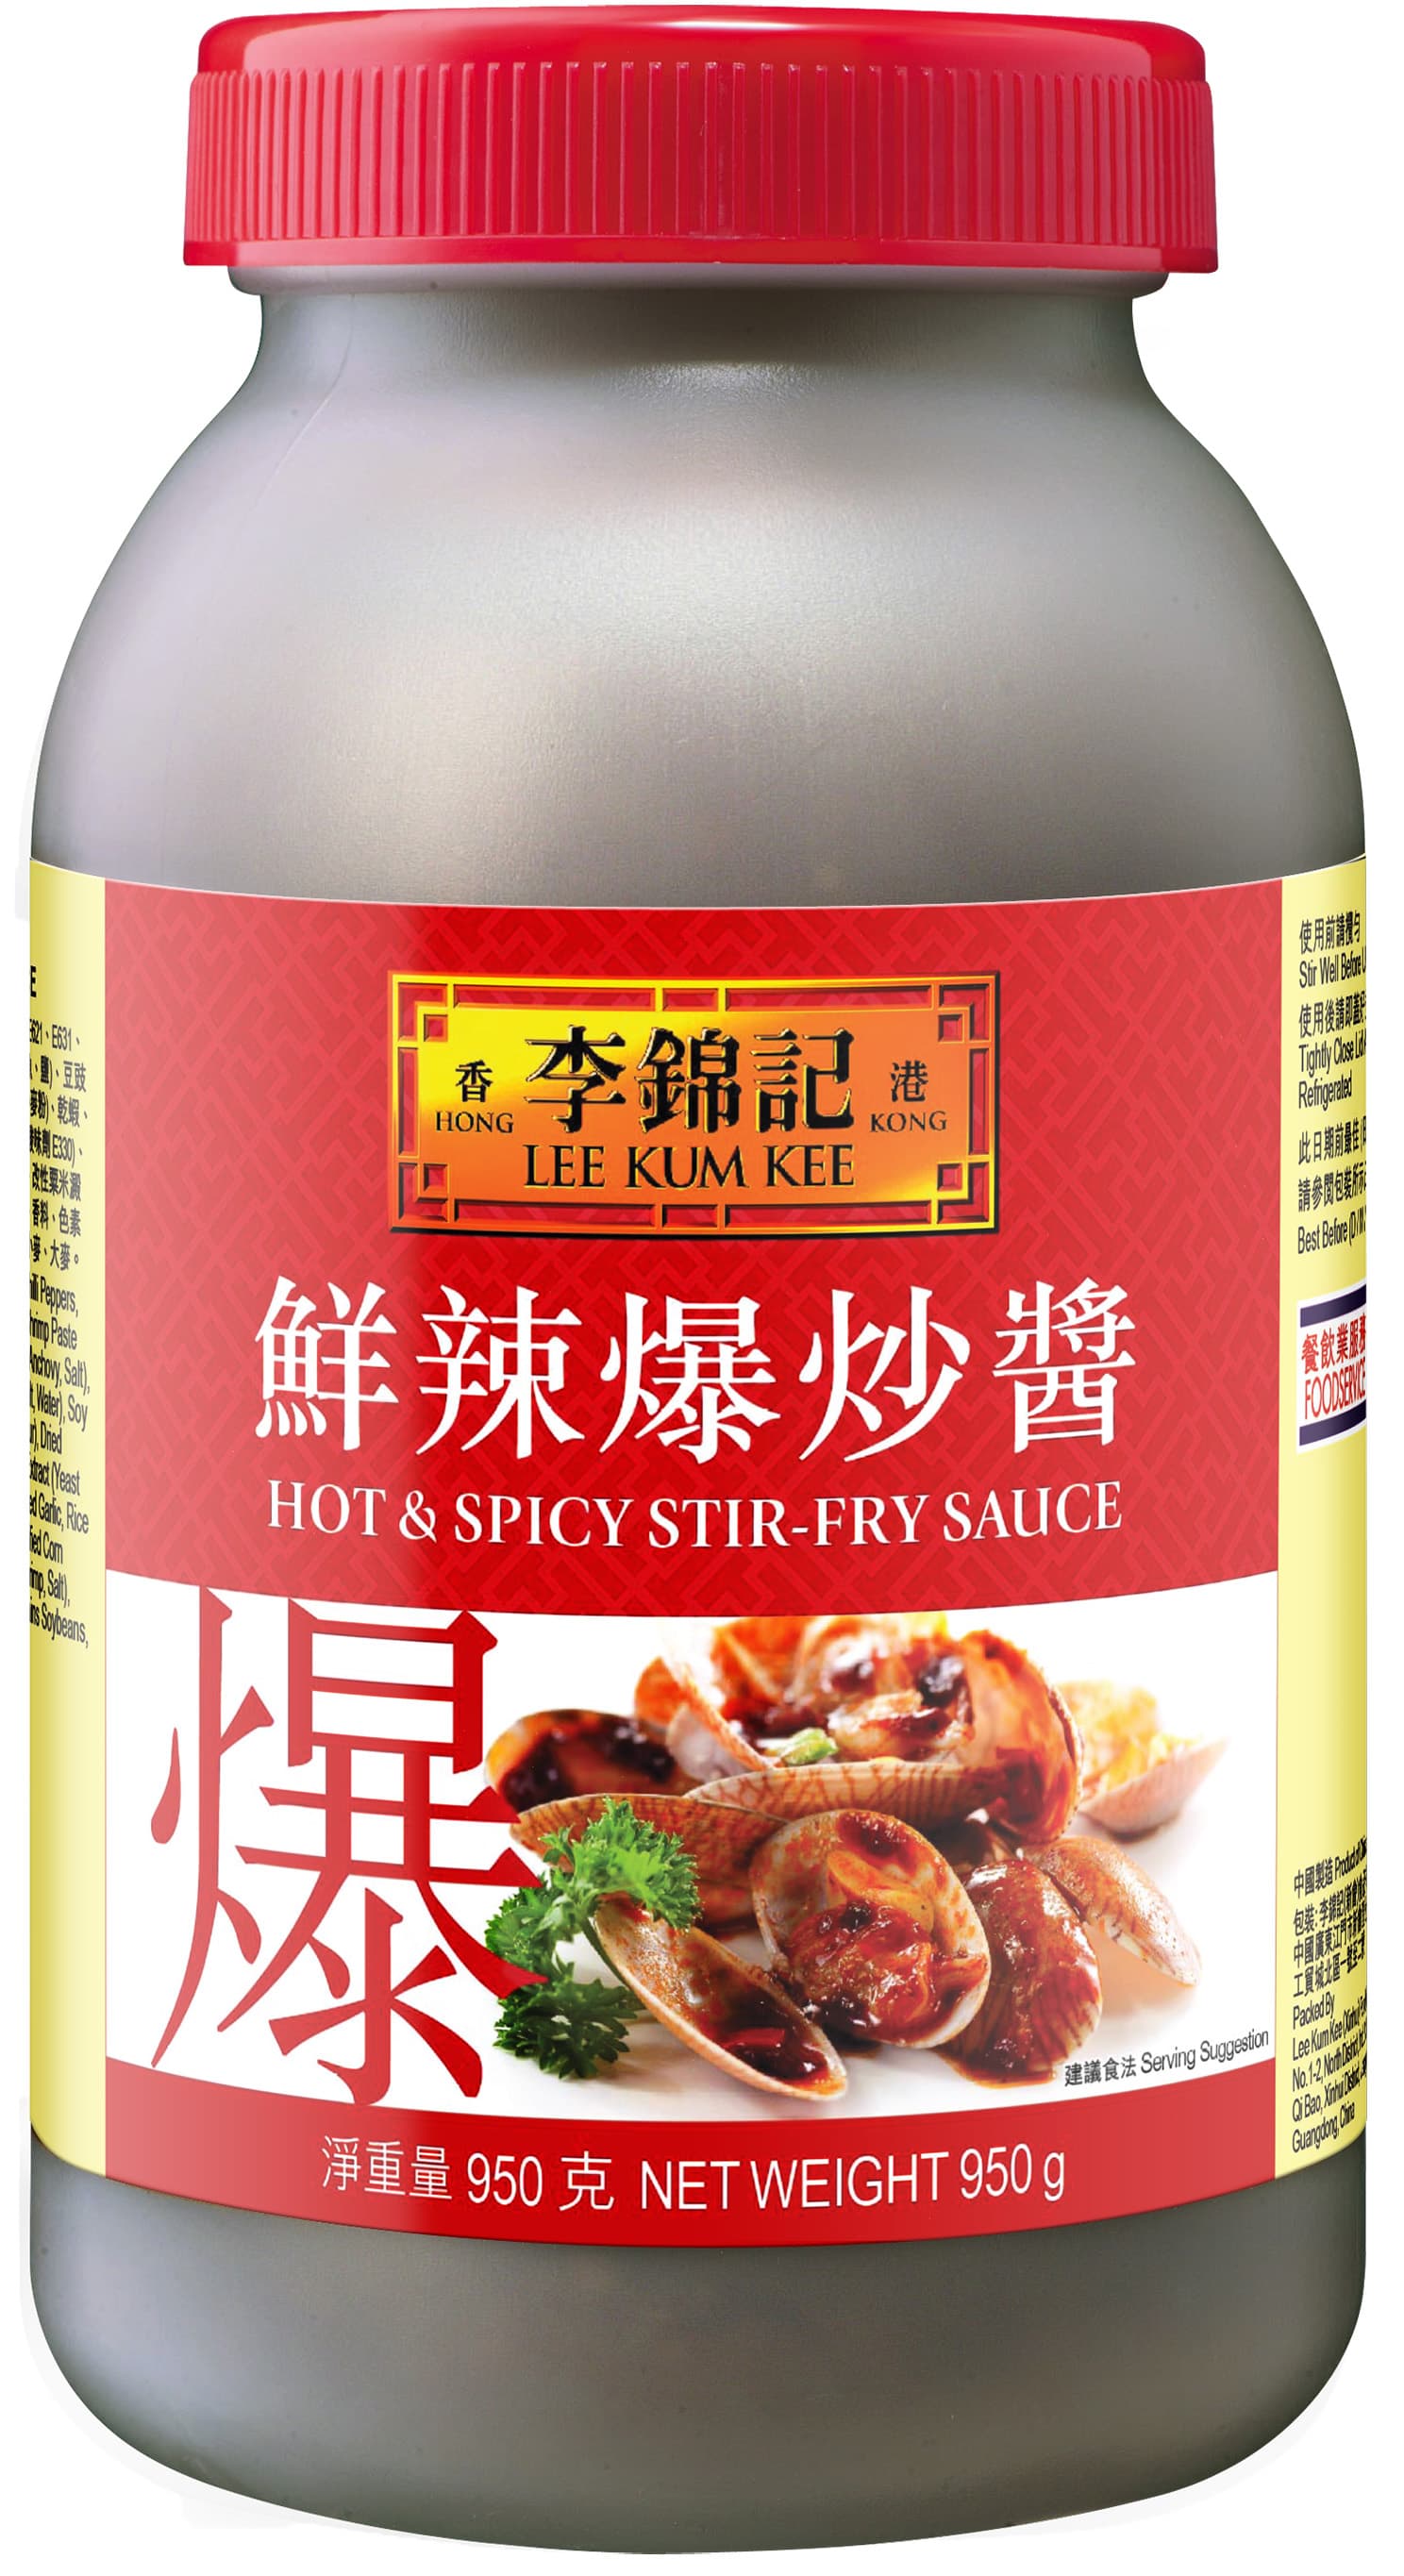 Hot & Spicy Stir-Fry